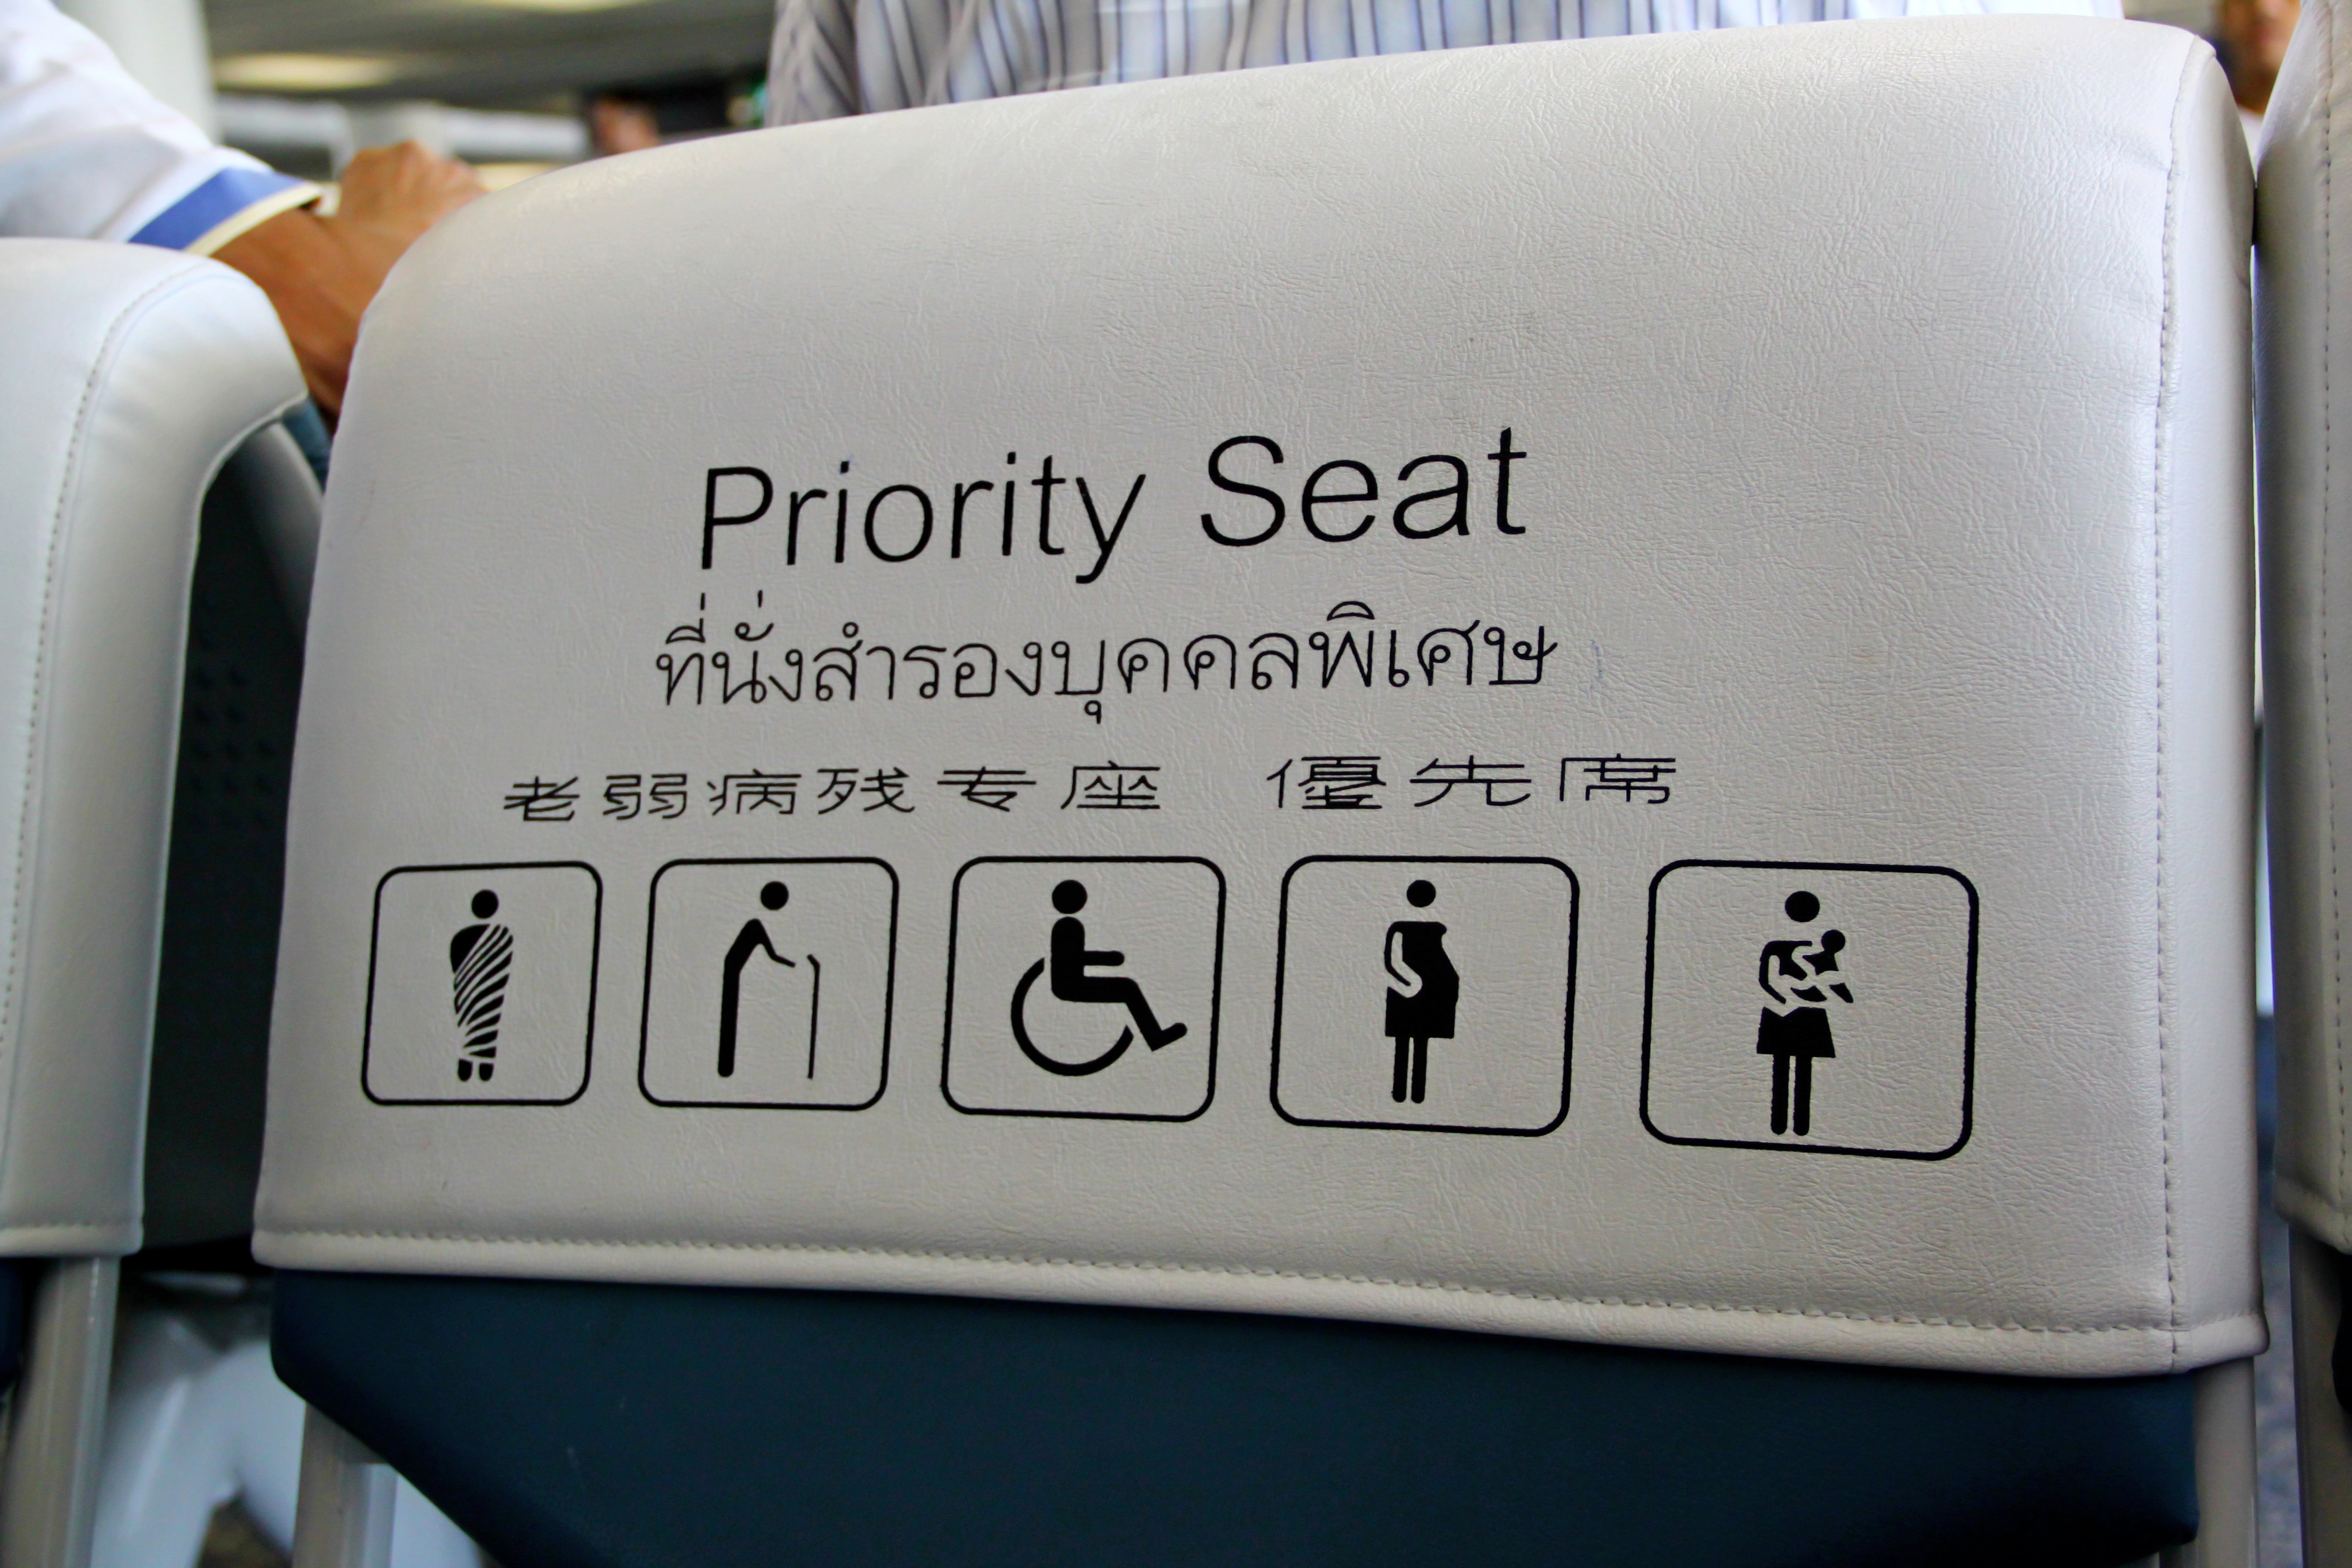 People using public transport should follow the etiquette. | Photo: Shutterstock